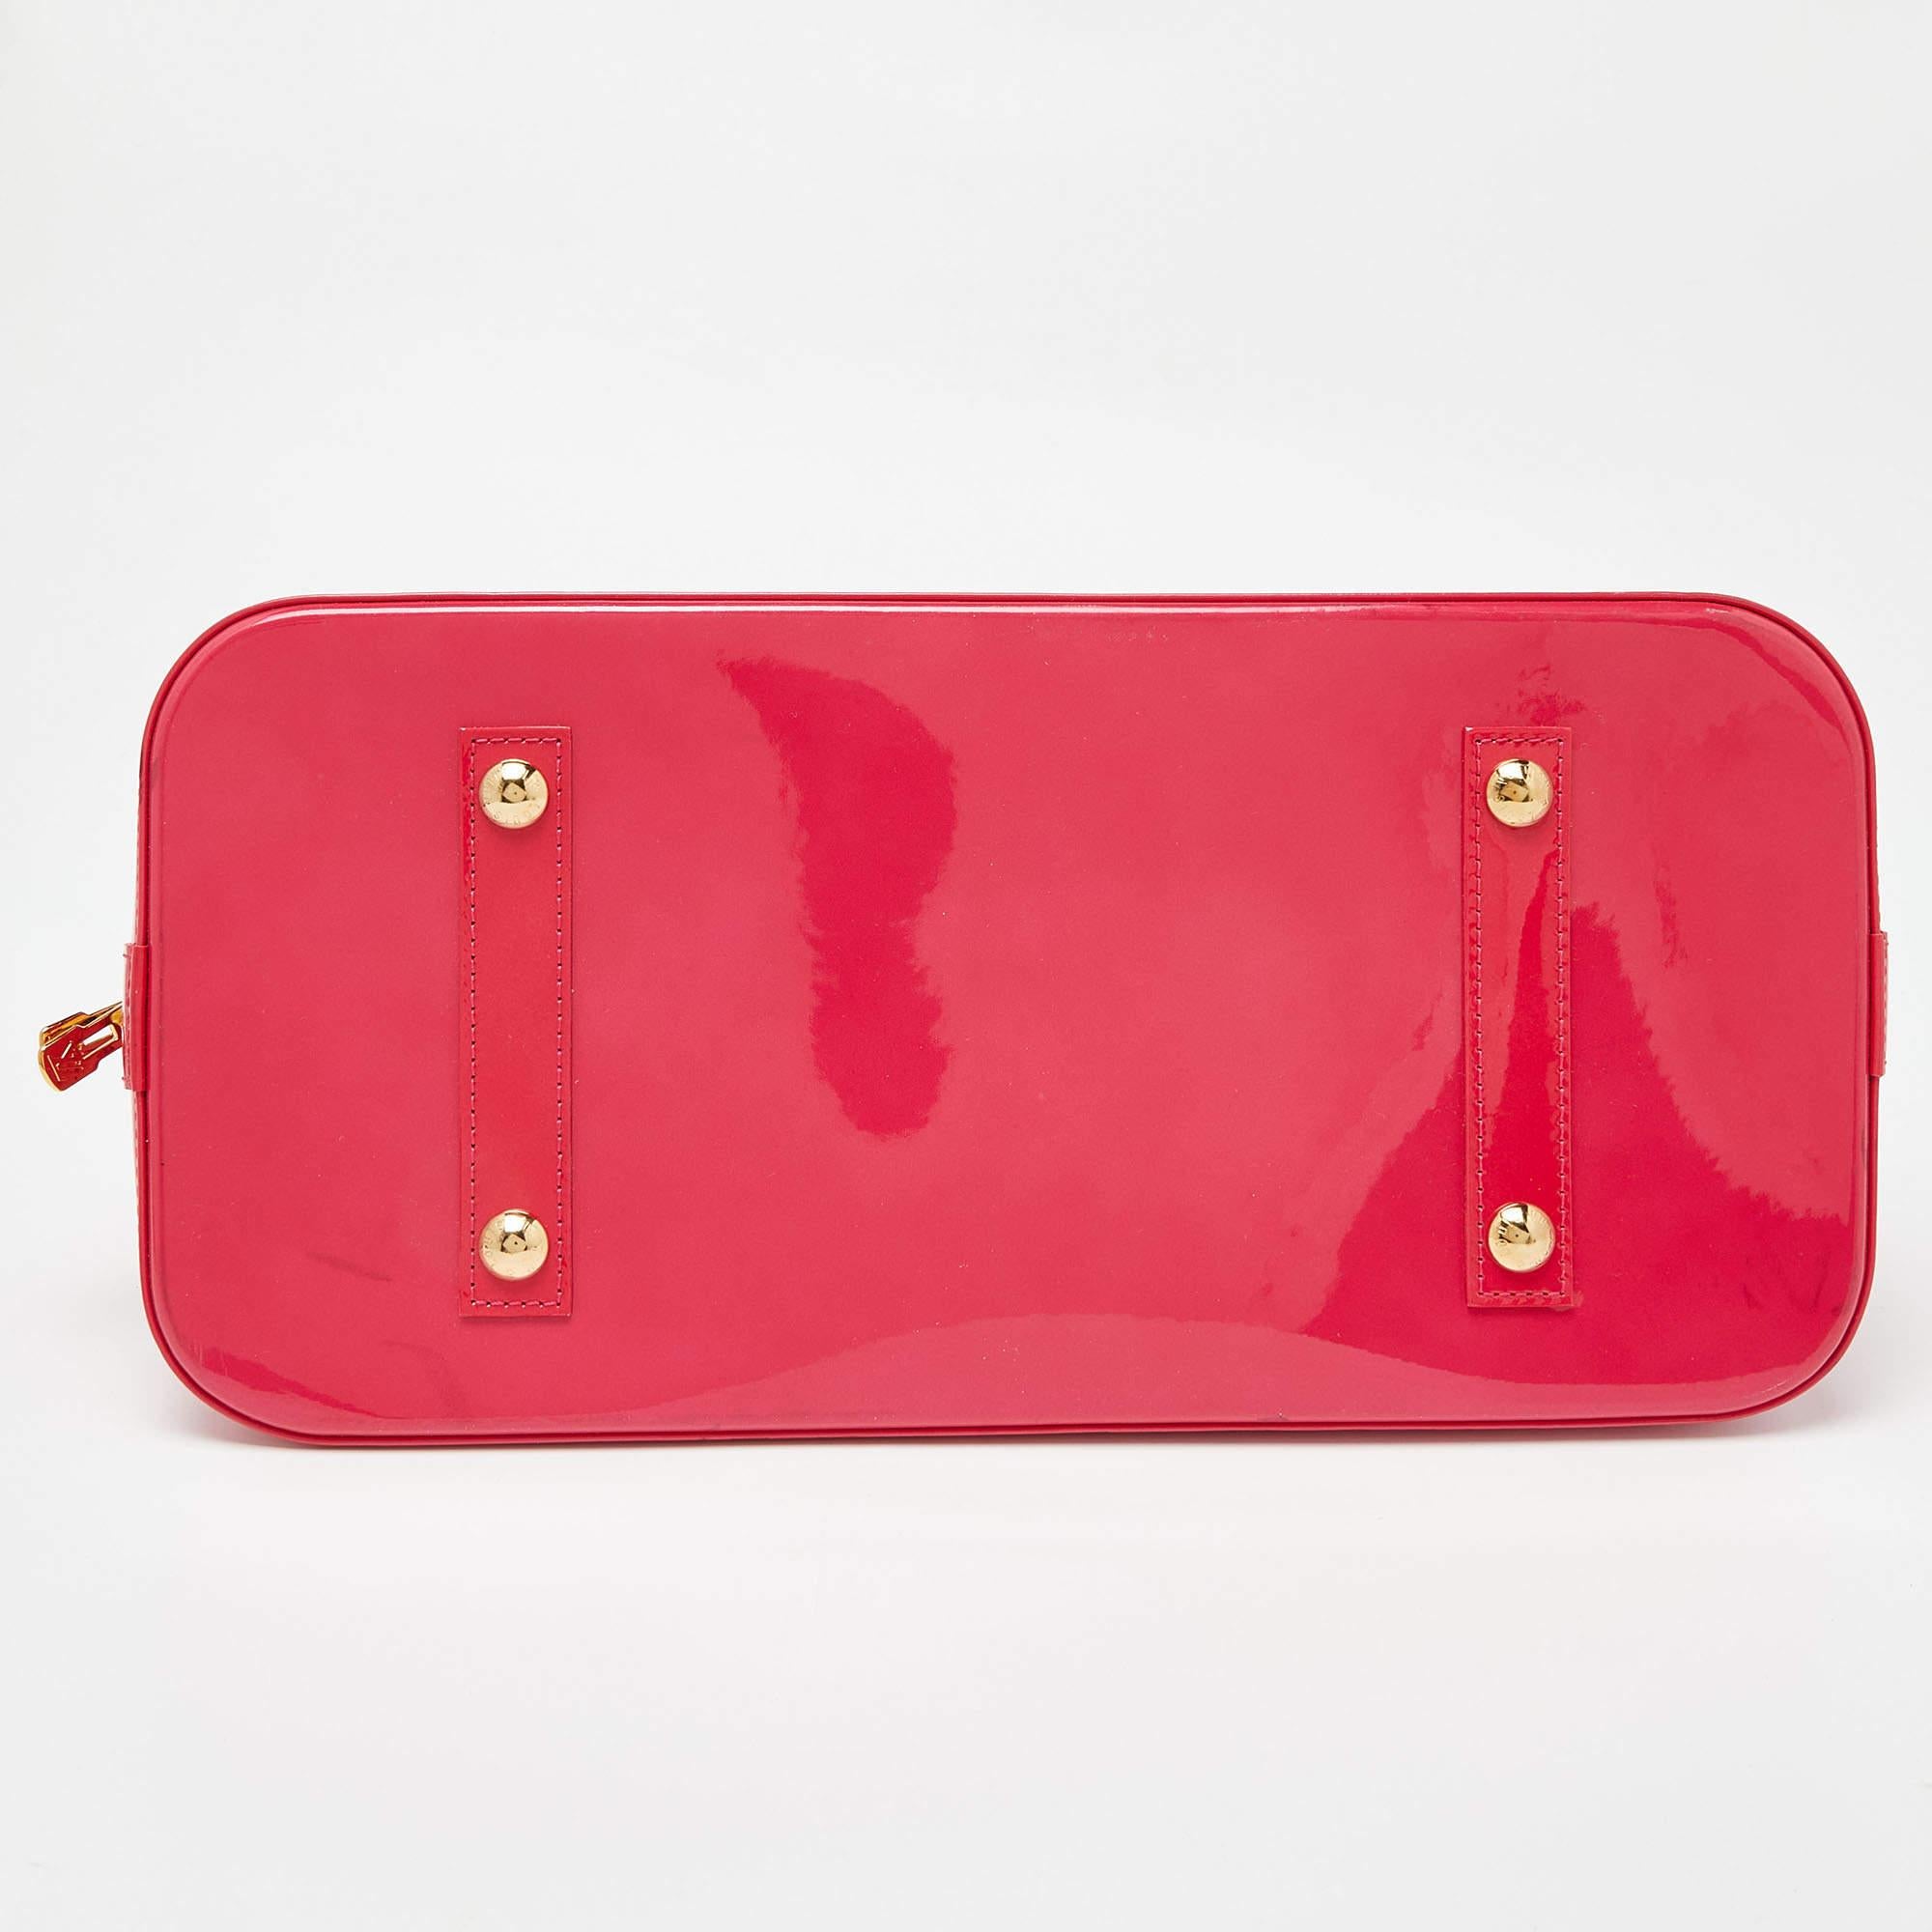 Louis Vuitton Rose Pop Monogram Vernis Alma GM Bag For Sale 10